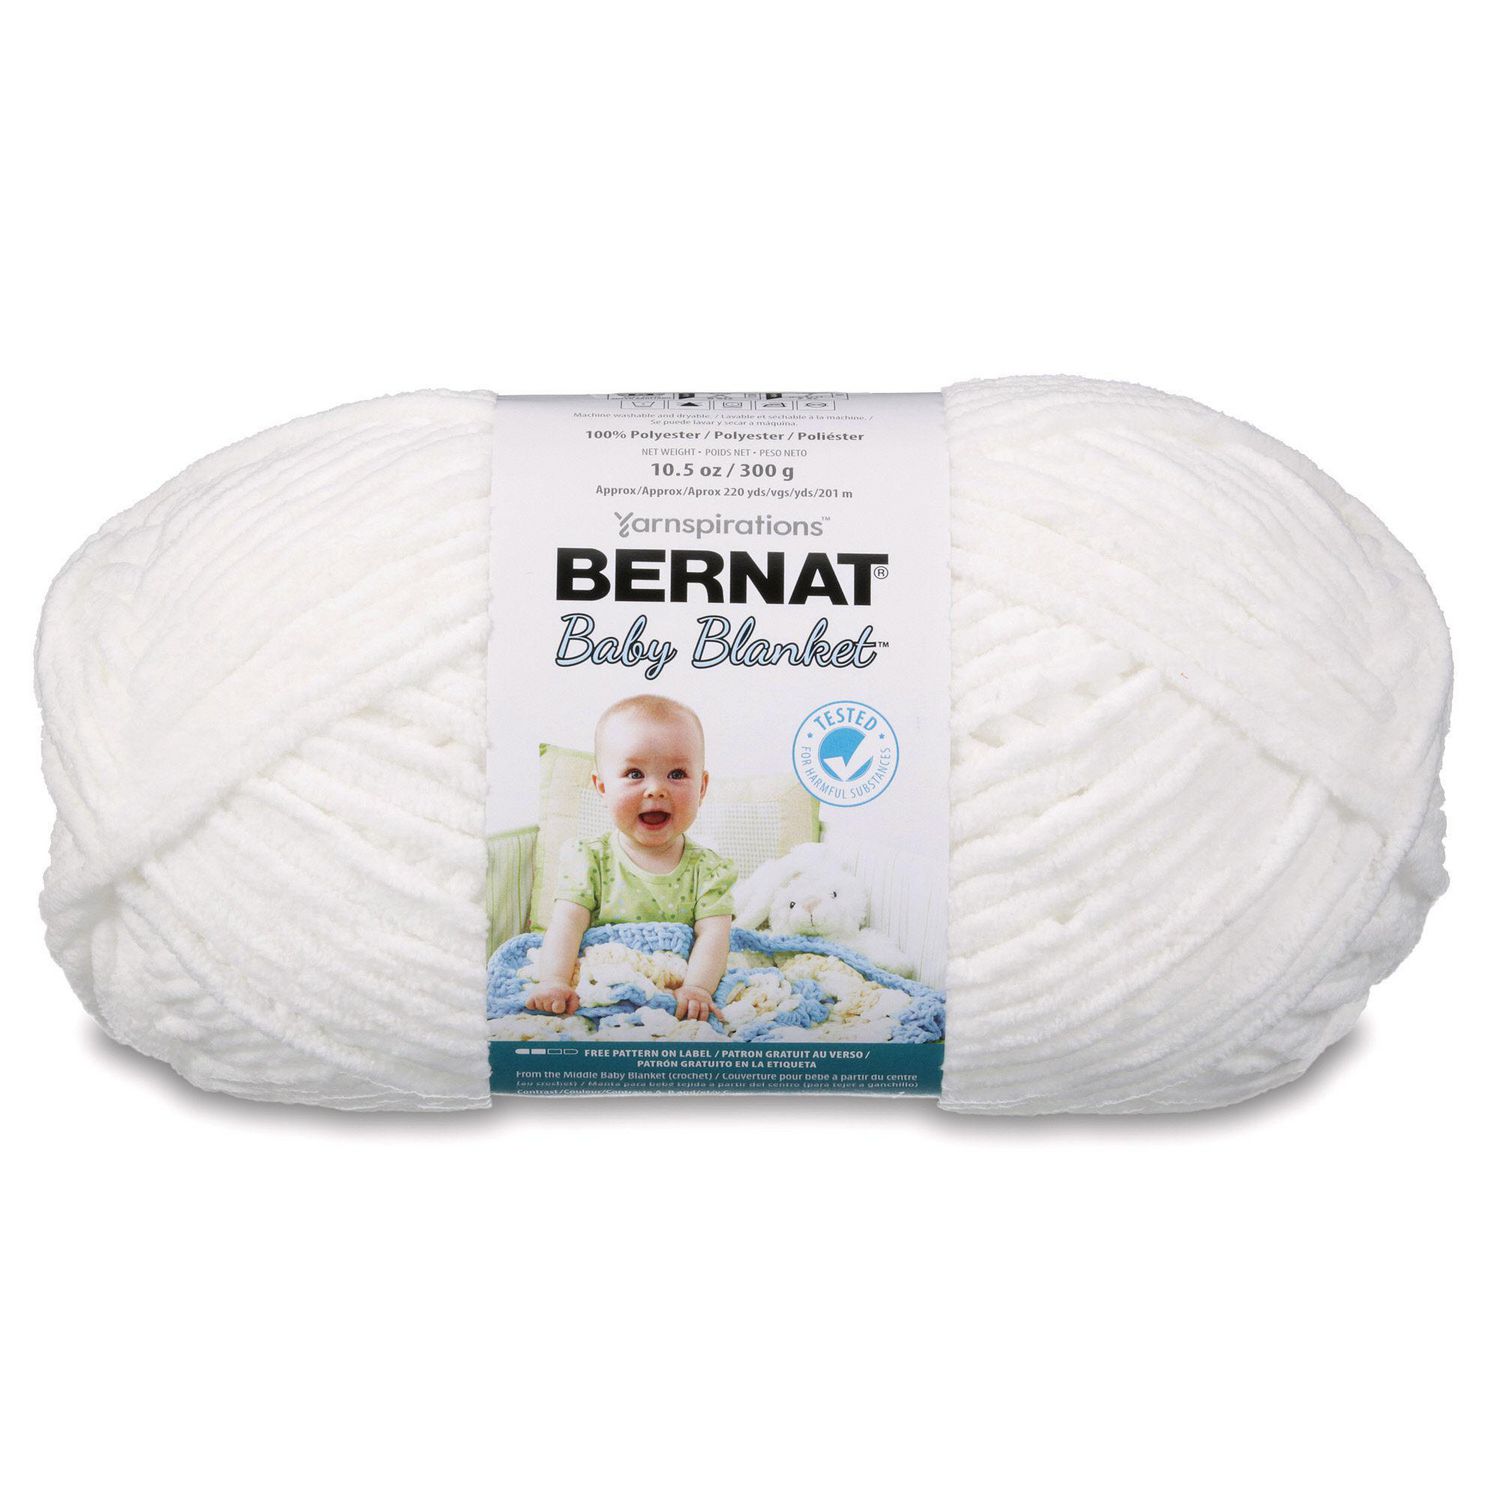 Bernat Baby Blanket Yarn 300 G 105 Oz Walmart Canada